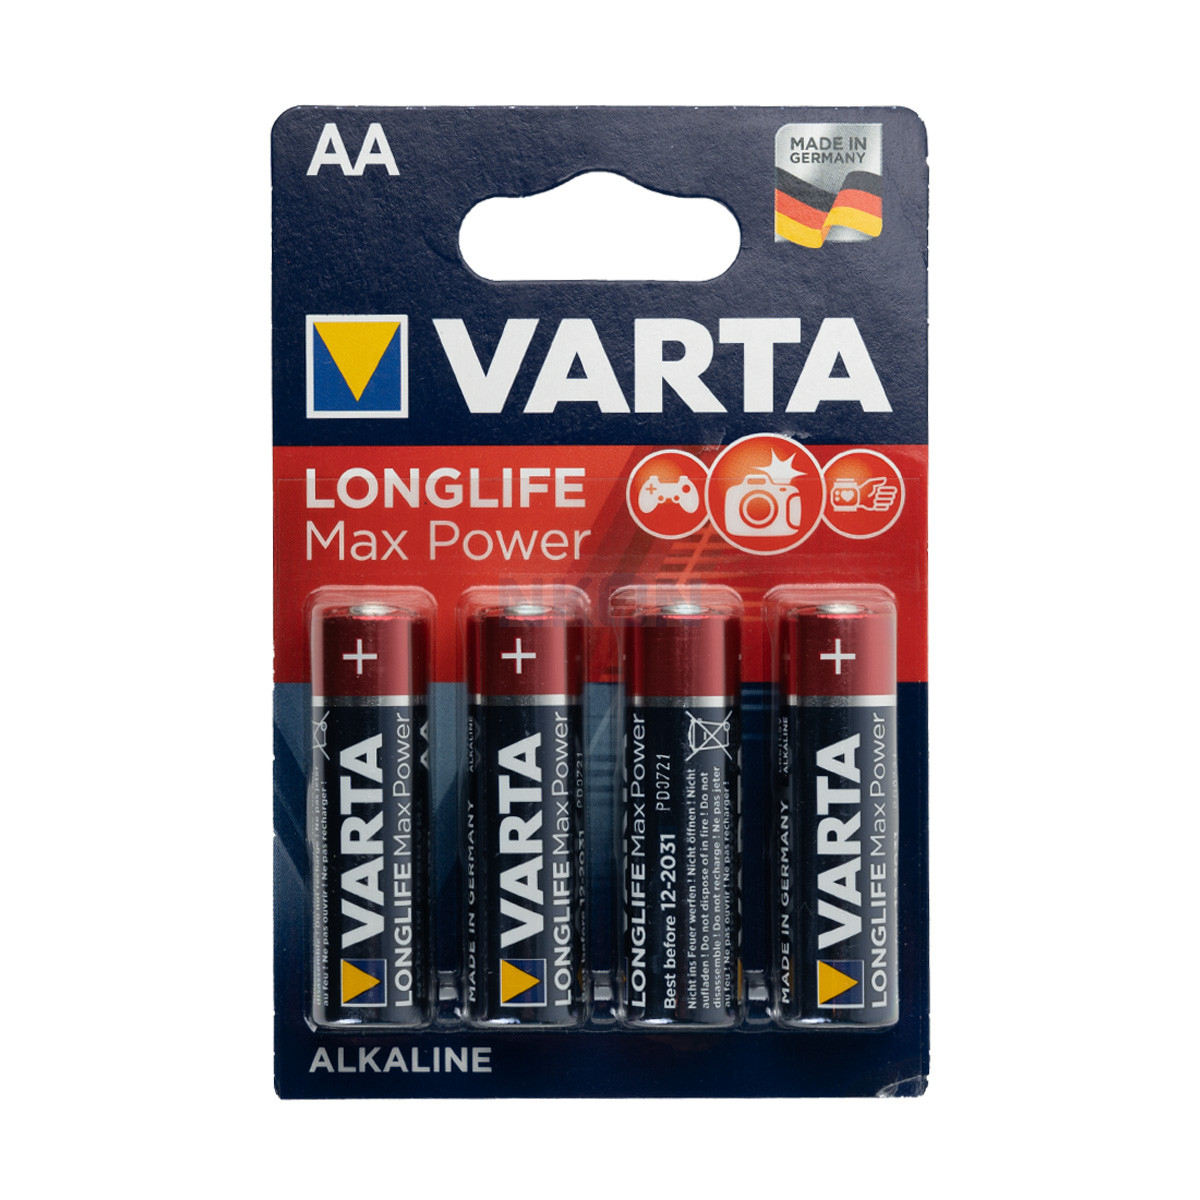 4 AA Varta Longlife - 1.5V - AA - Alkaline - Disposable batteries